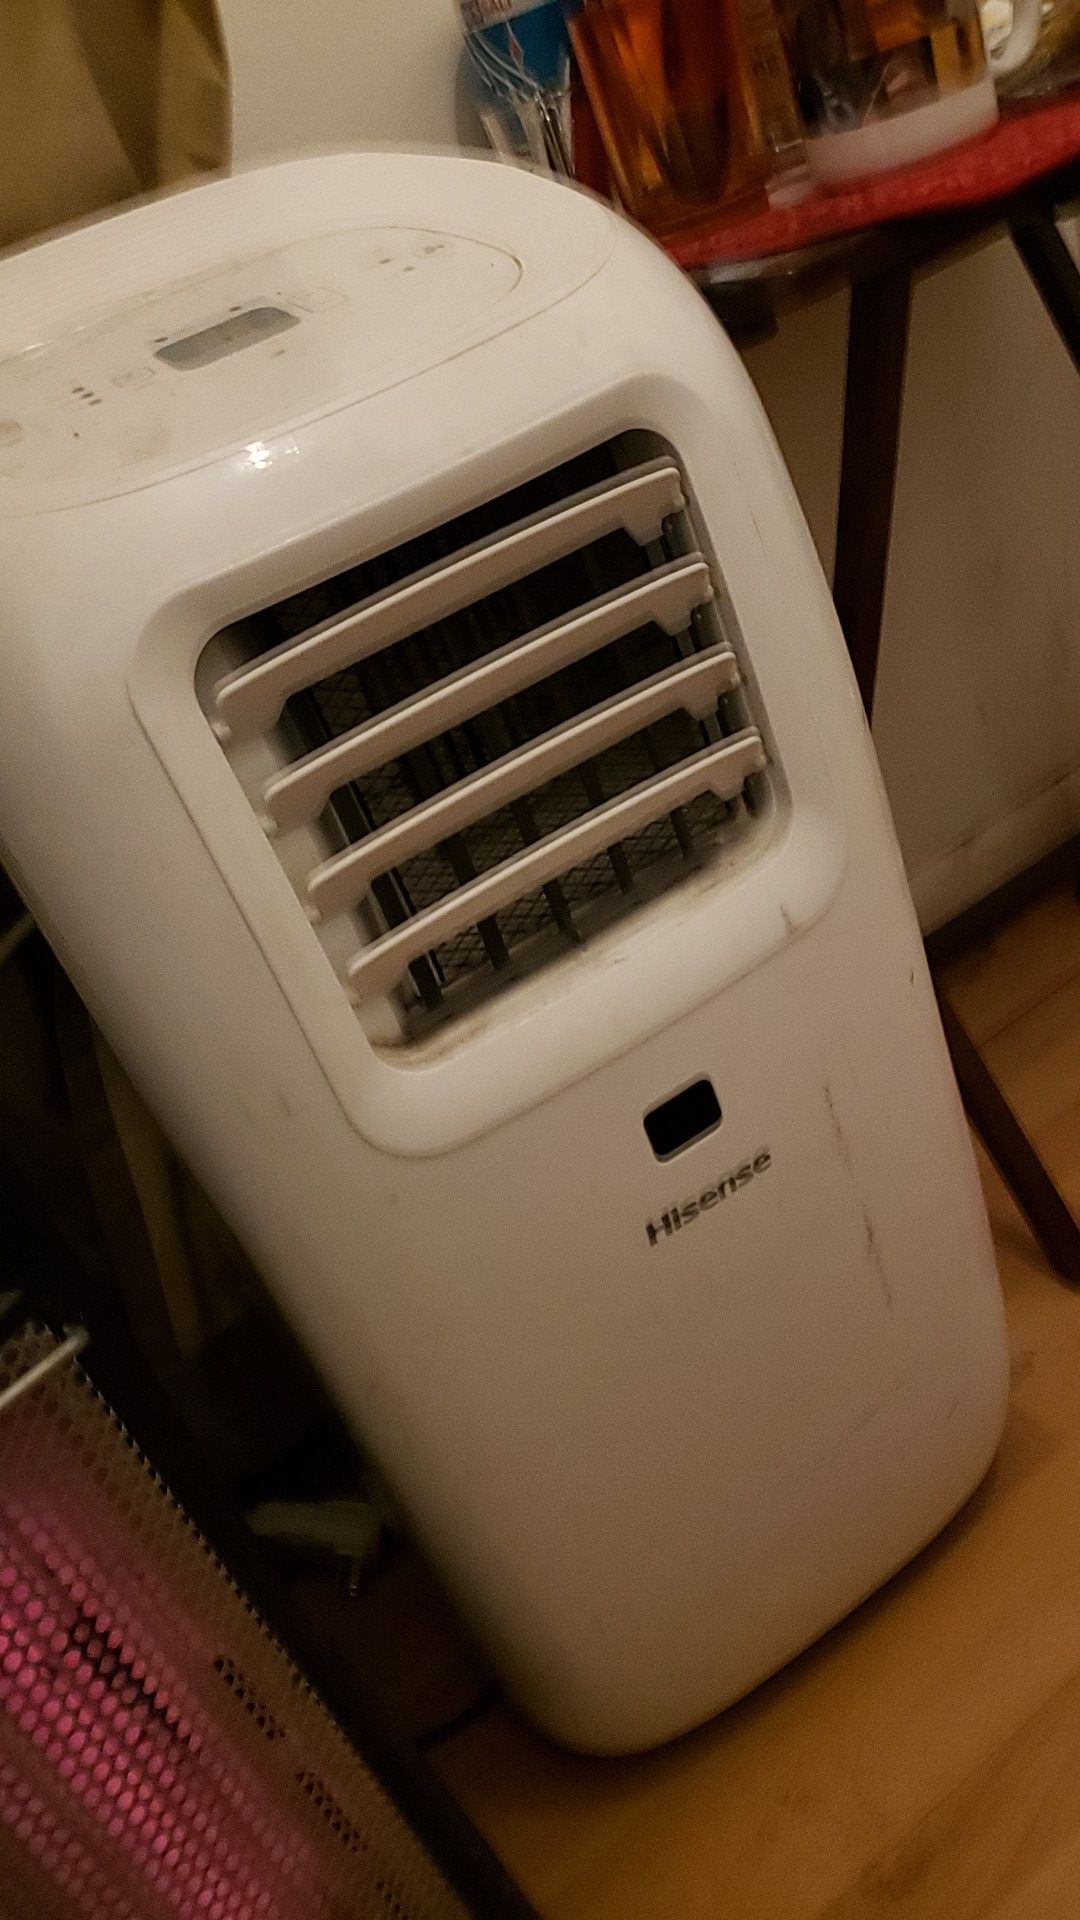 Hinsense air conditioner